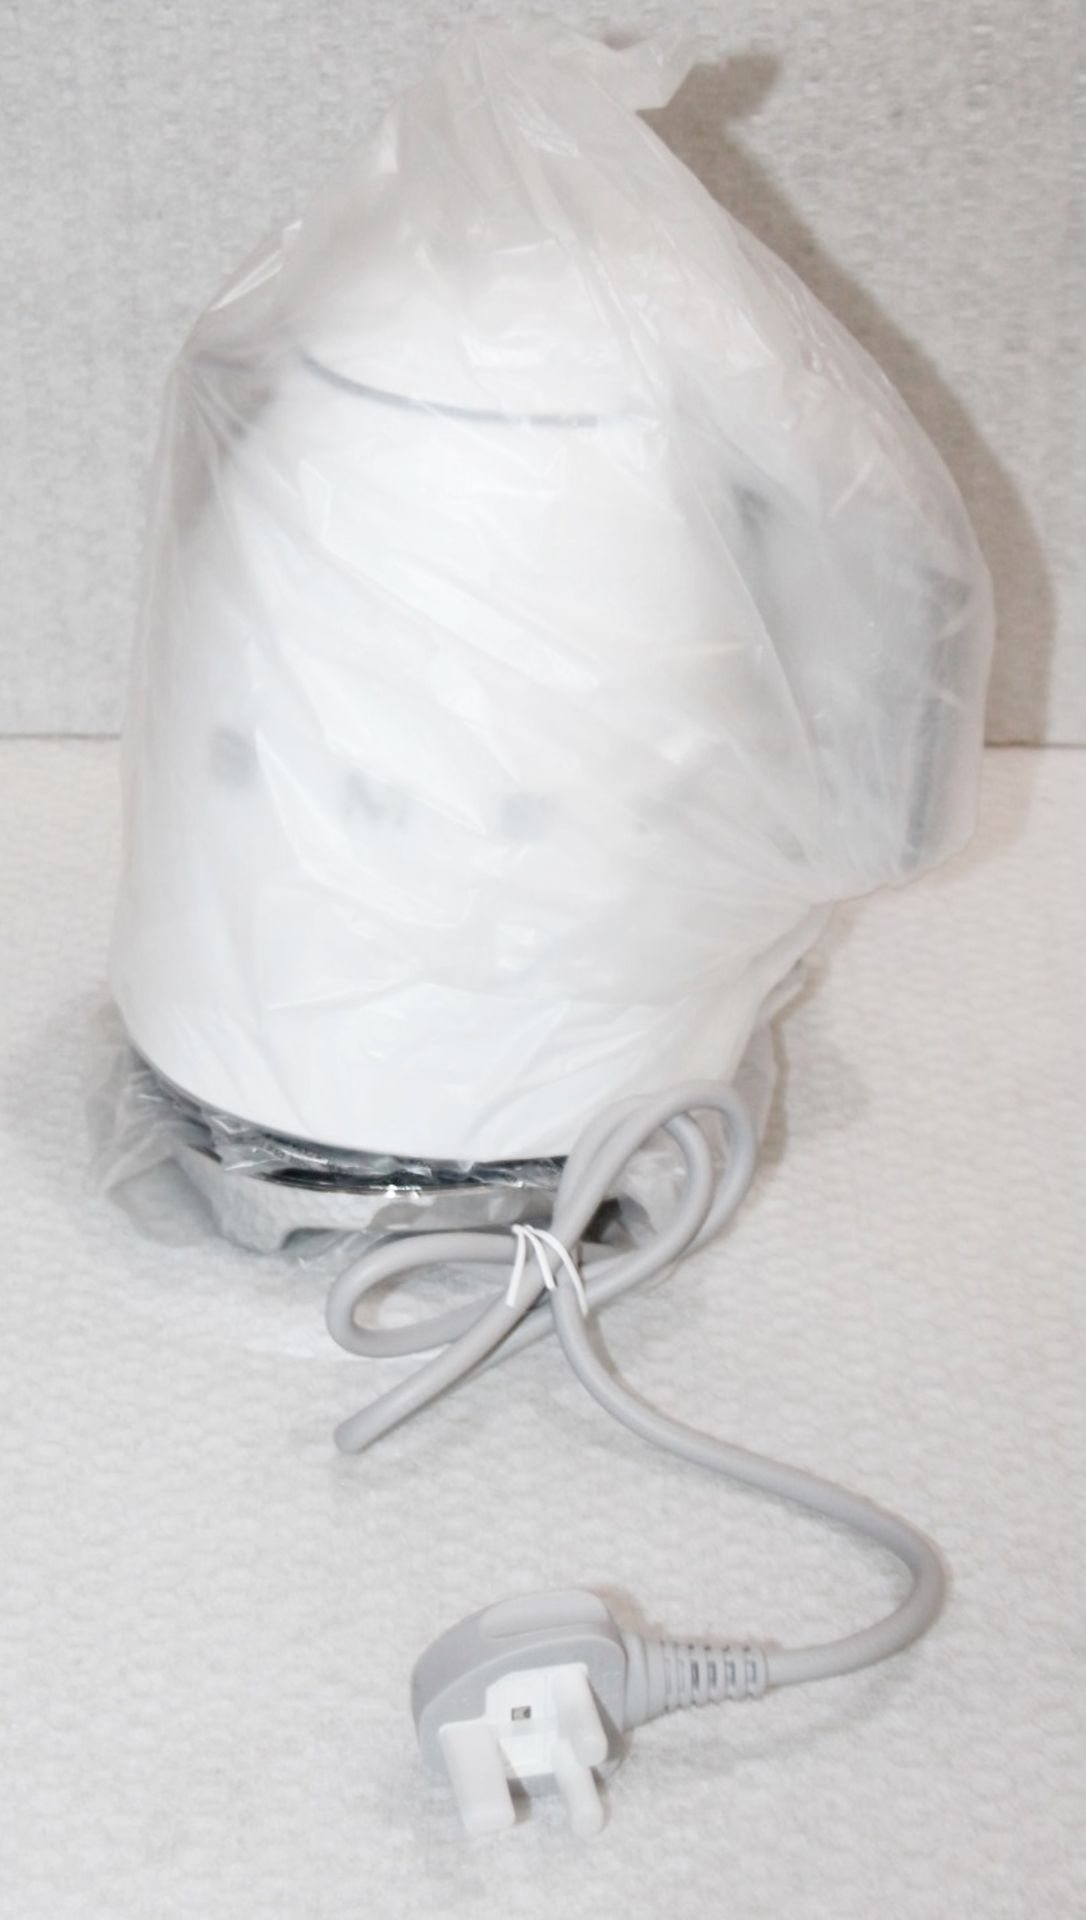 1 x SMEG Retro Kettle In White - Capacity: 1.7L - Original Price £189.00 - Unused Boxed Stock - Image 16 of 17